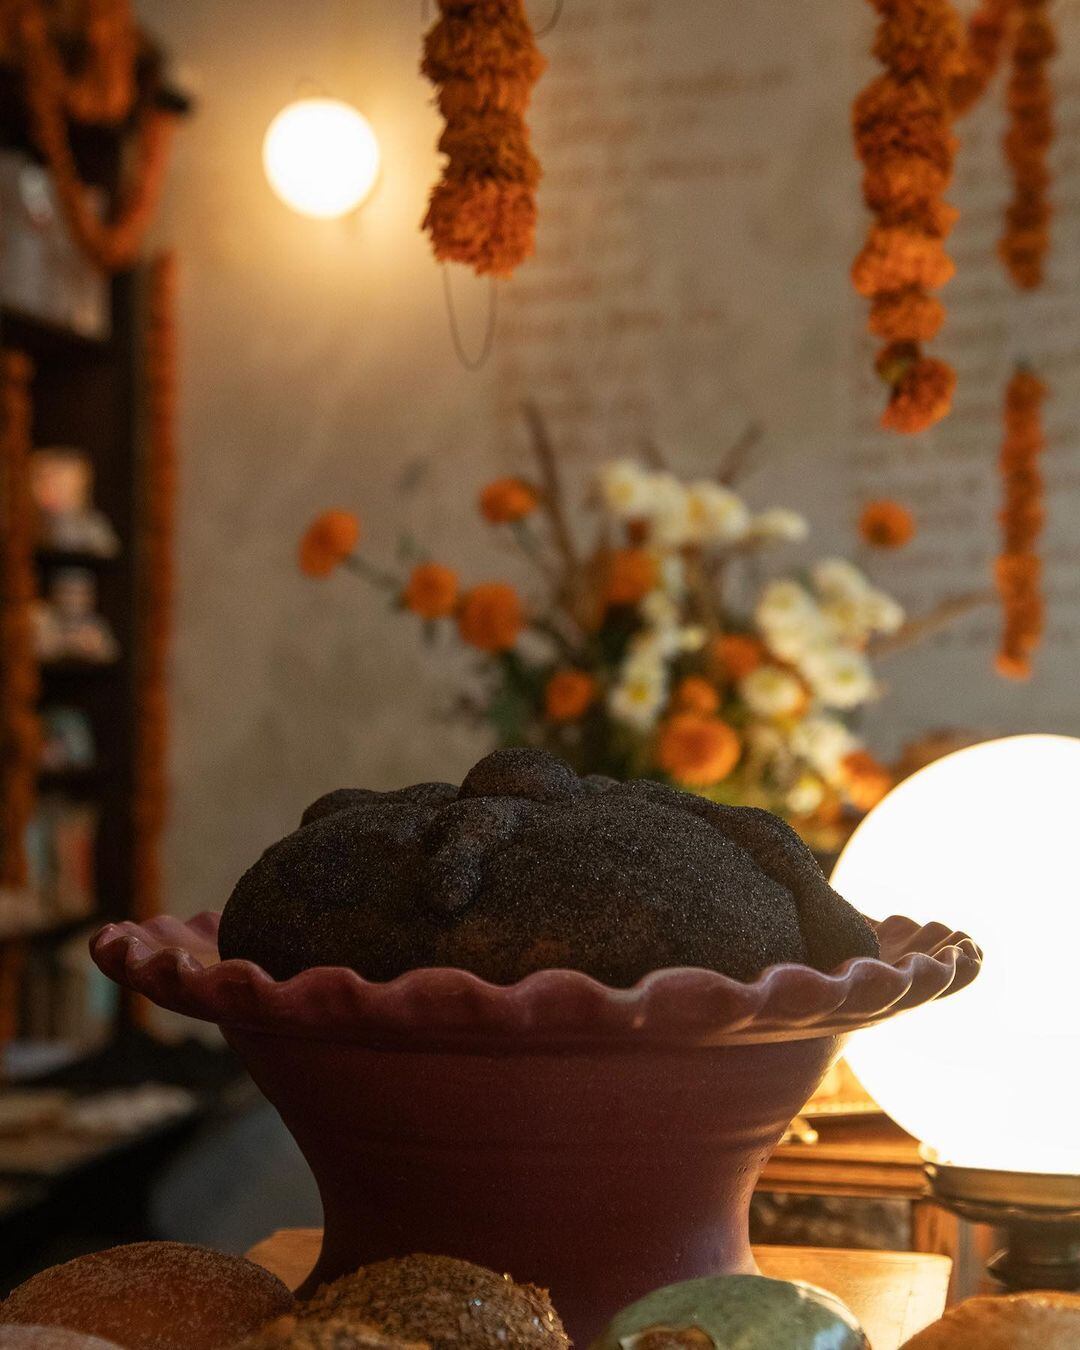 Pan de muerto de Rosetta. (Foto: Instagram / @panaderiarosetta).